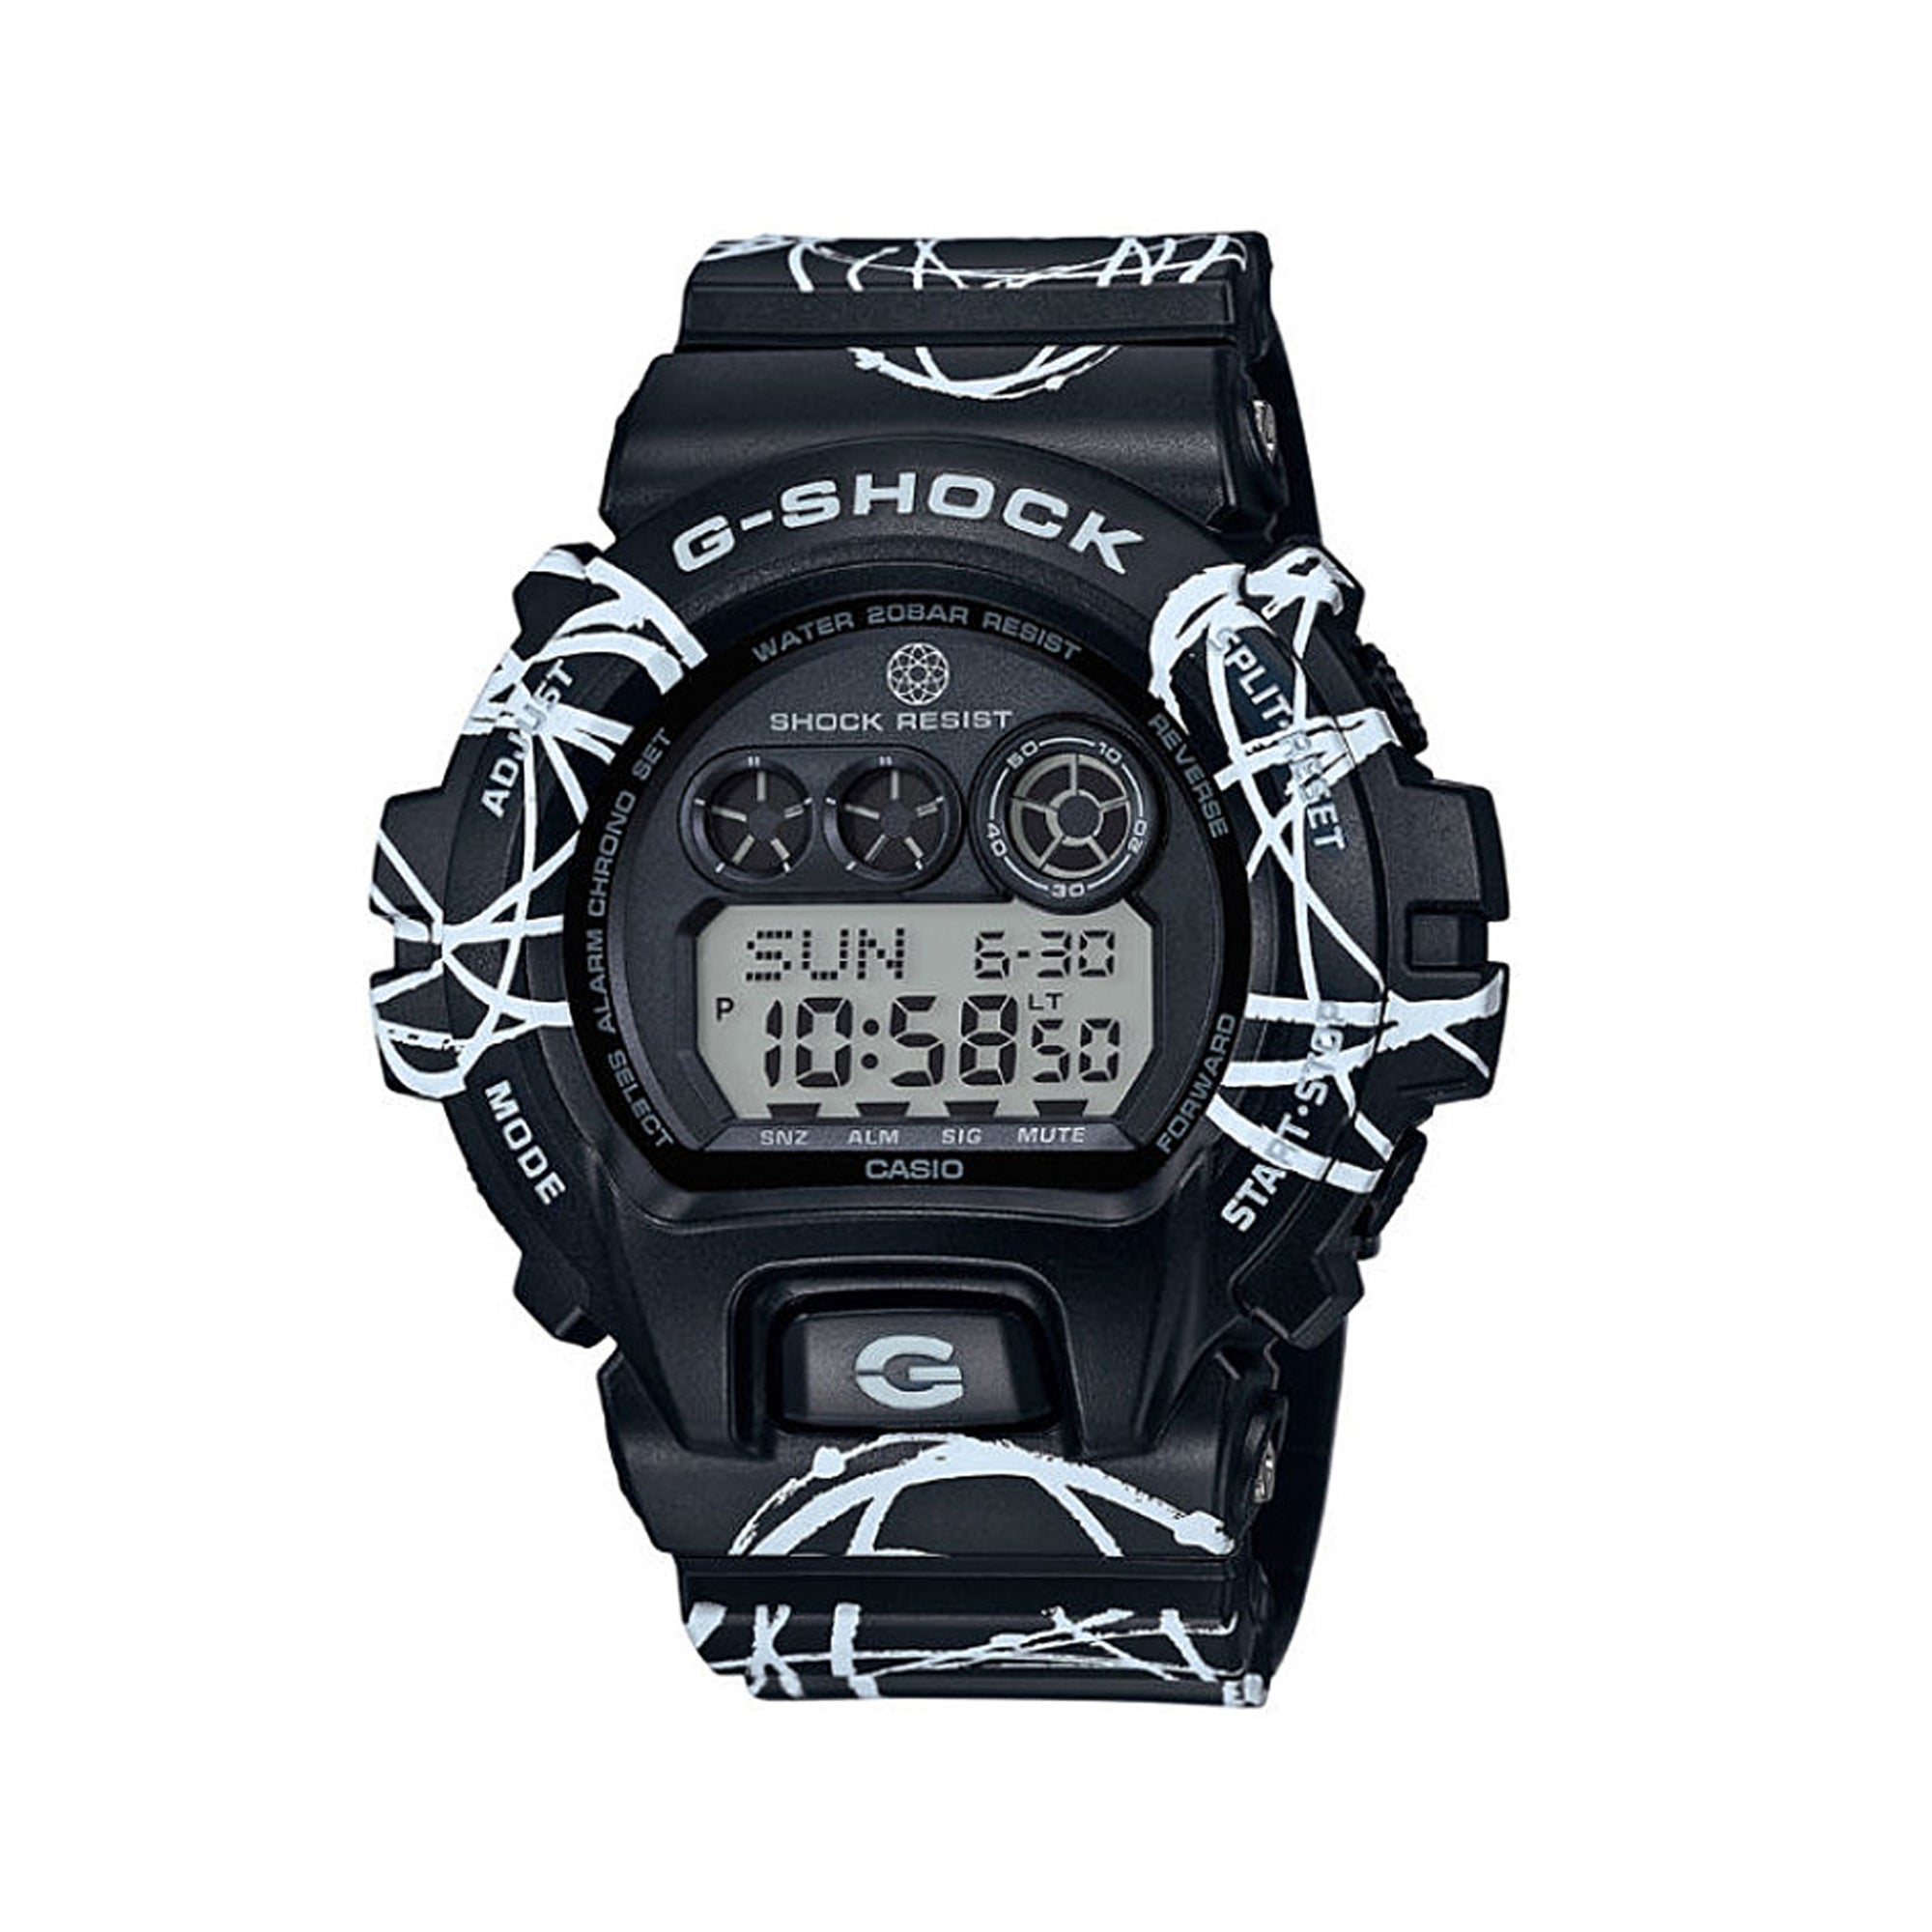 Casio G-Shock X Futura 6900 Series Watch